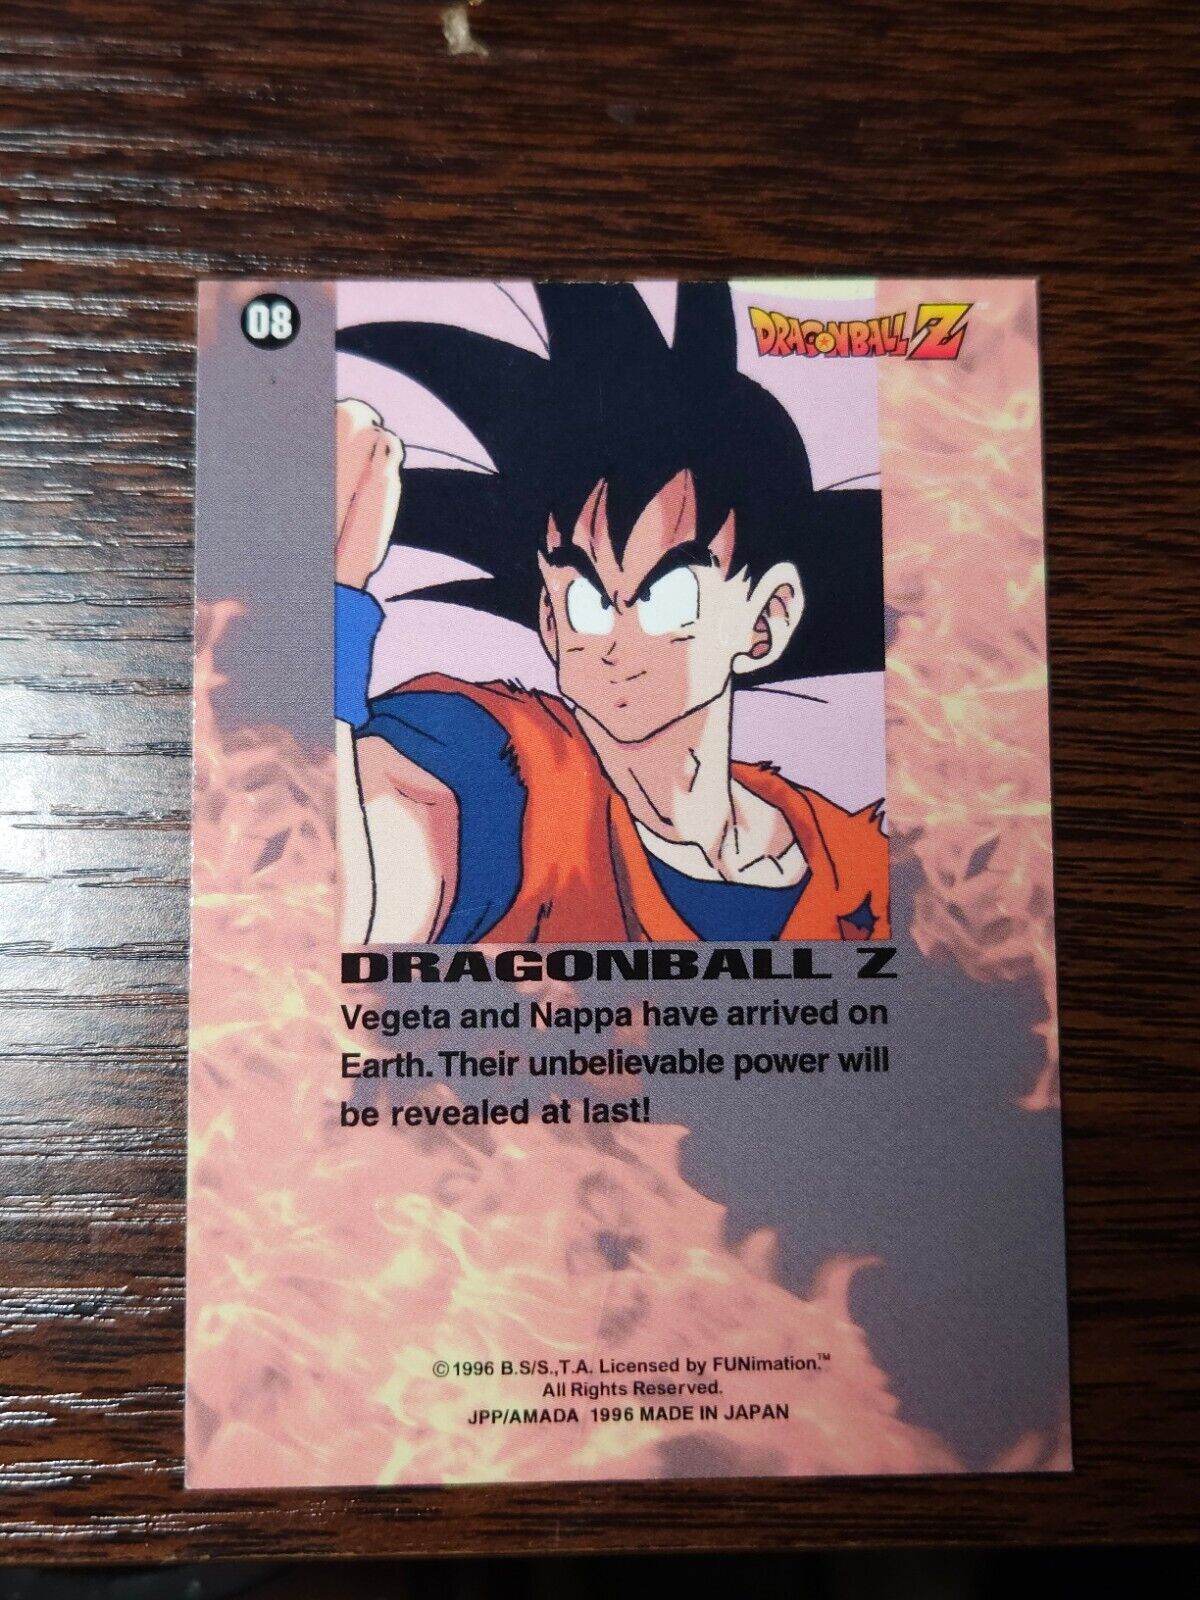 1996 Dragon Ball Z Artbox Series 1 Prism Holofoil #8 Card Errors & Oddities